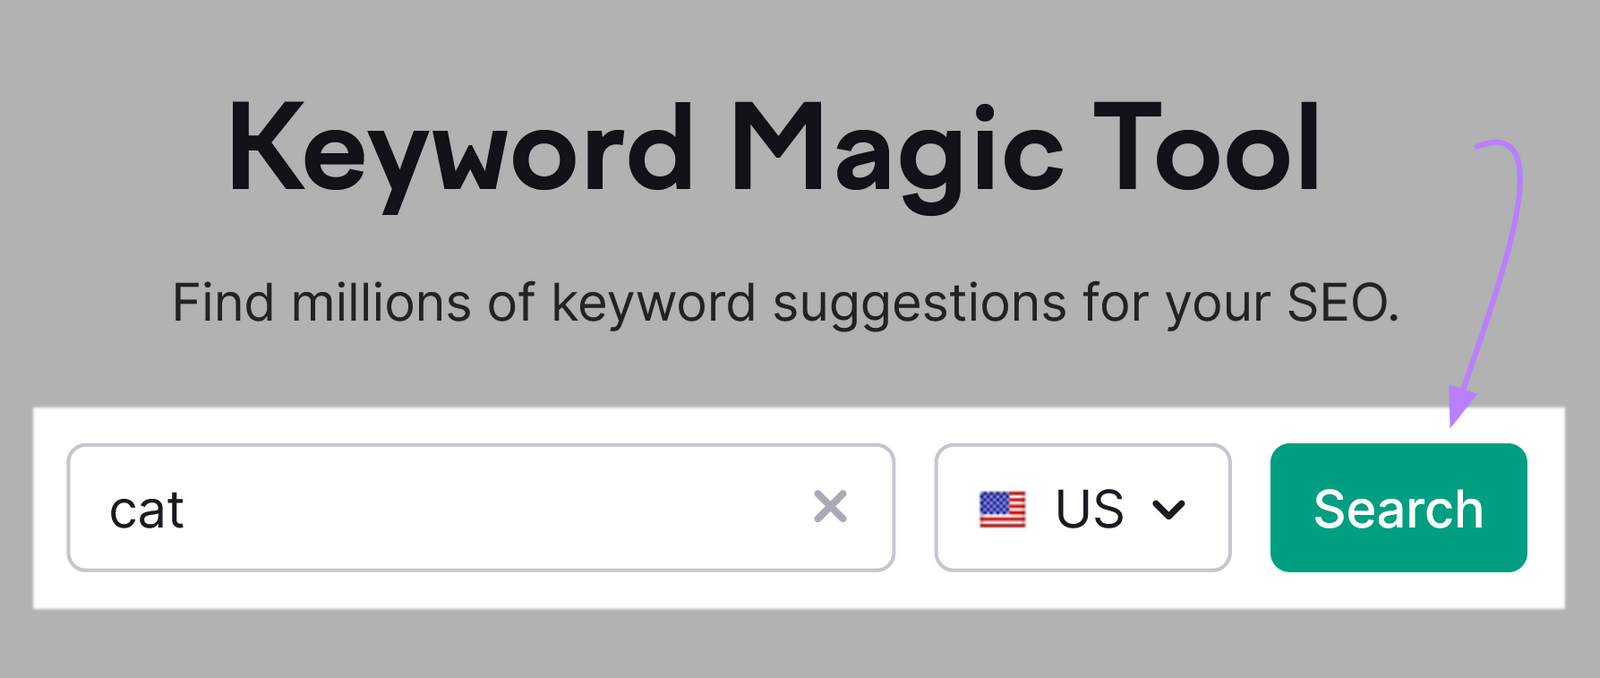 "cat" in Keyword Magic Tool search bar